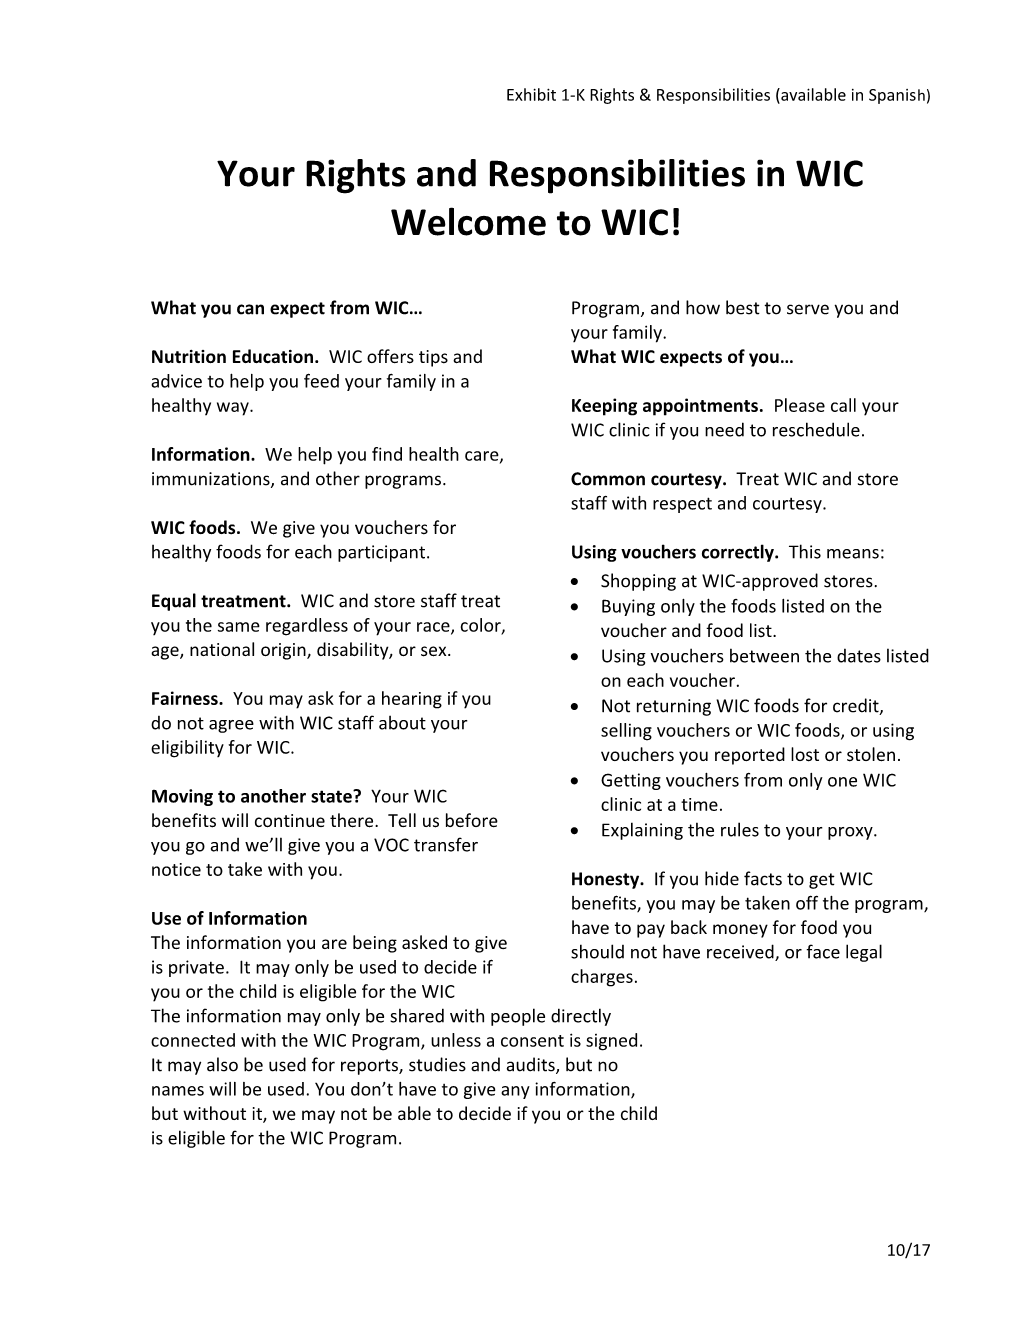 Exhibit 1-K Rights & Responsibilities -English